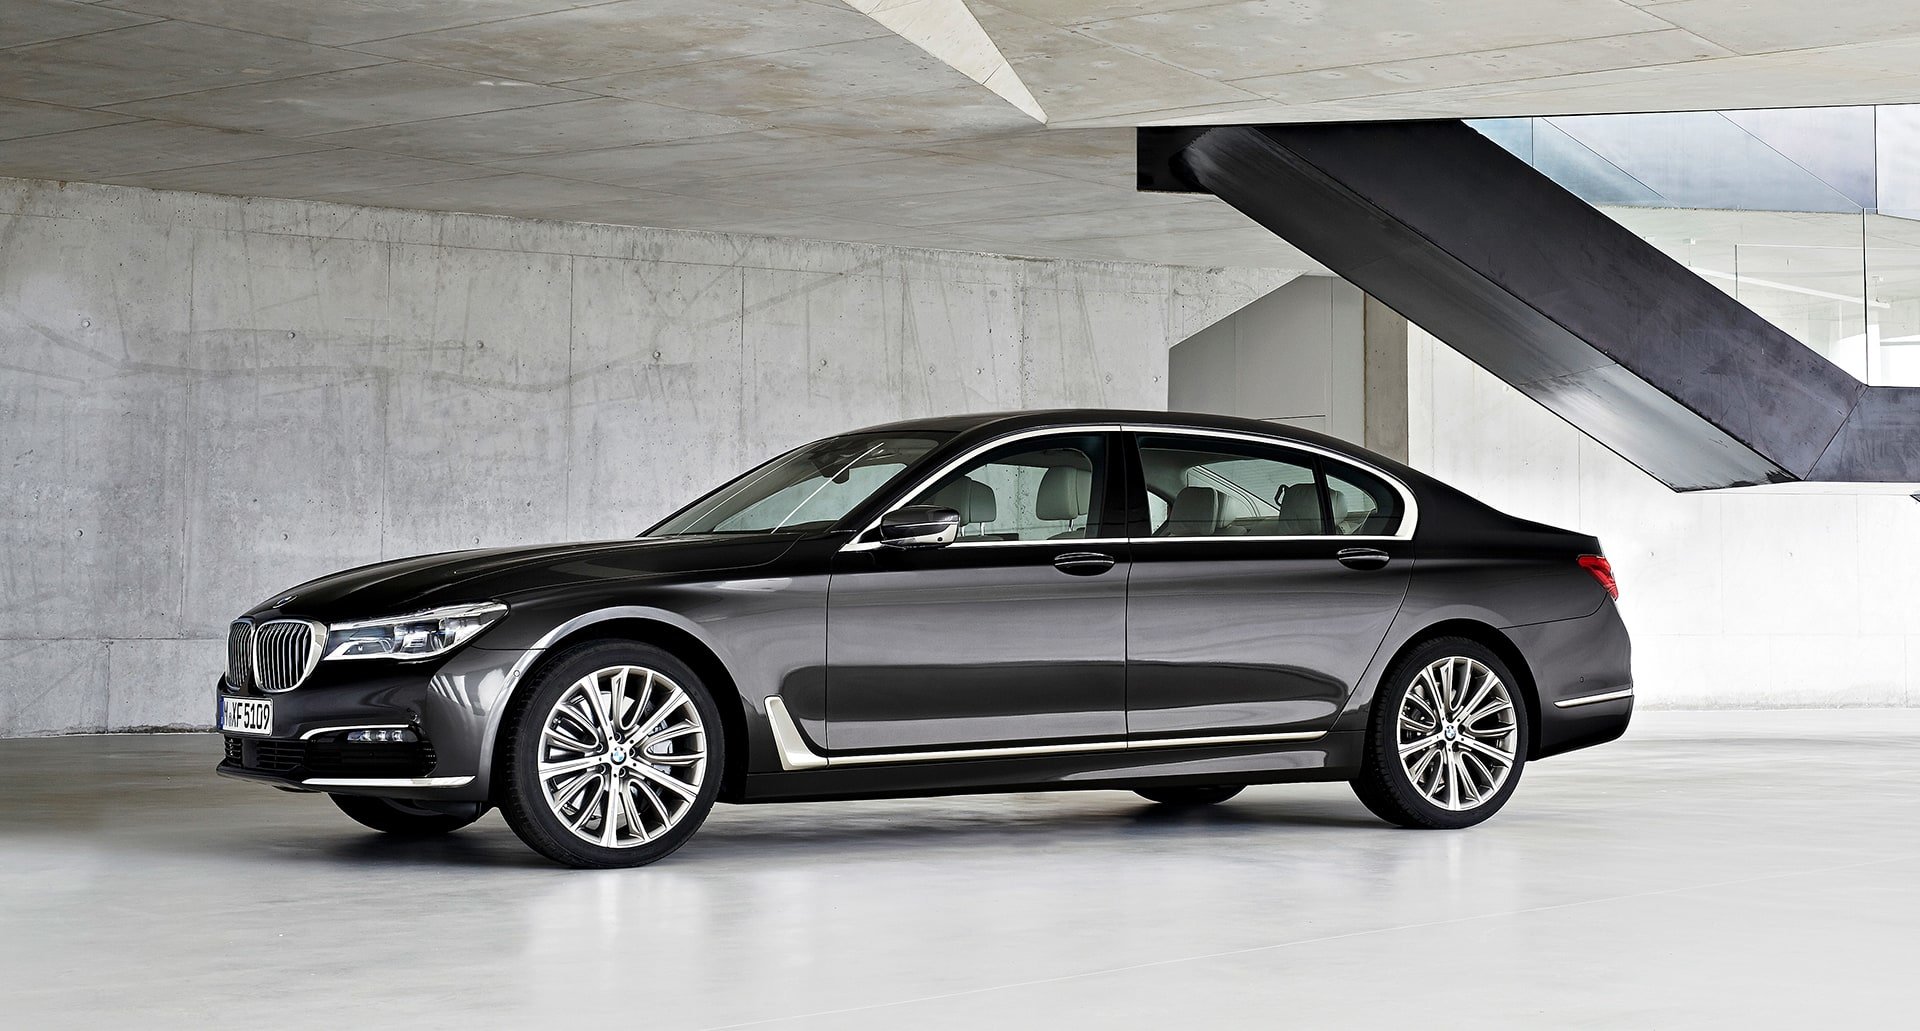 The New BMW 7 Series Redefines The Luxury Auto